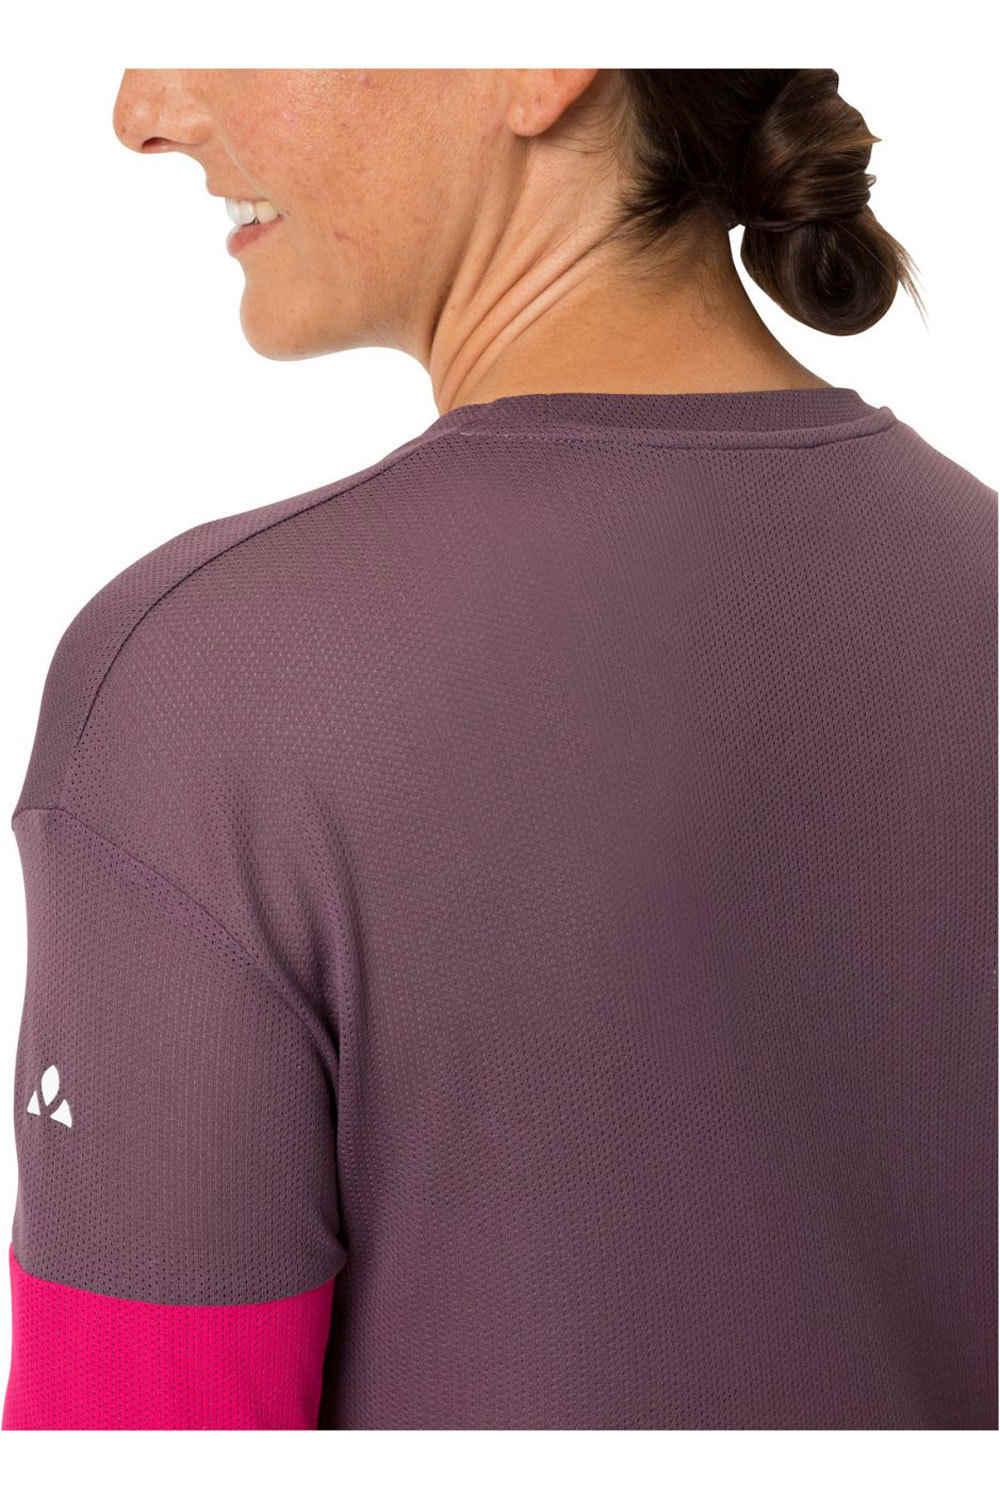 Vaude maillot manga larga mujer Women's Moab LS T-Shirt V 03